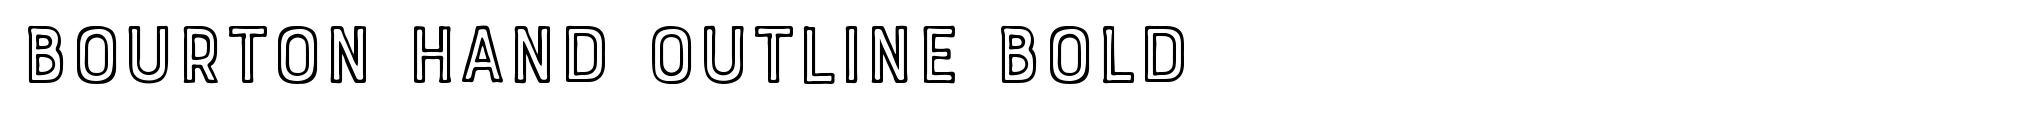 Bourton Hand Outline Bold image